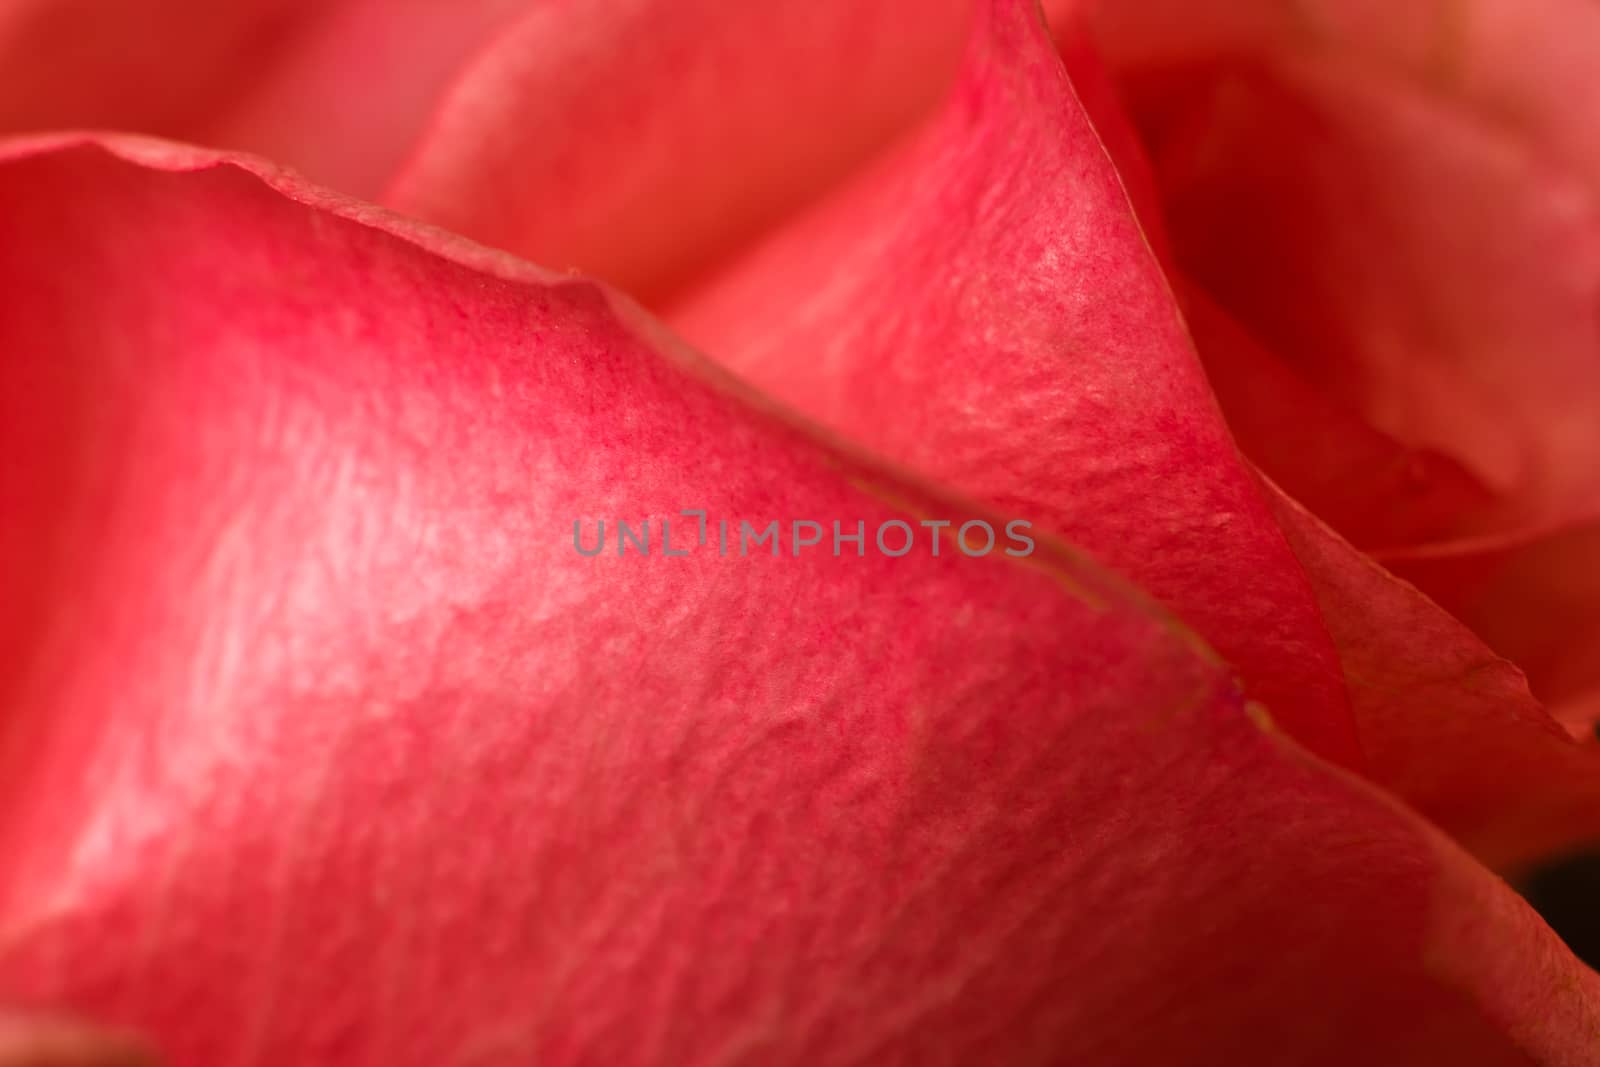 Red rose petals close up, pink background